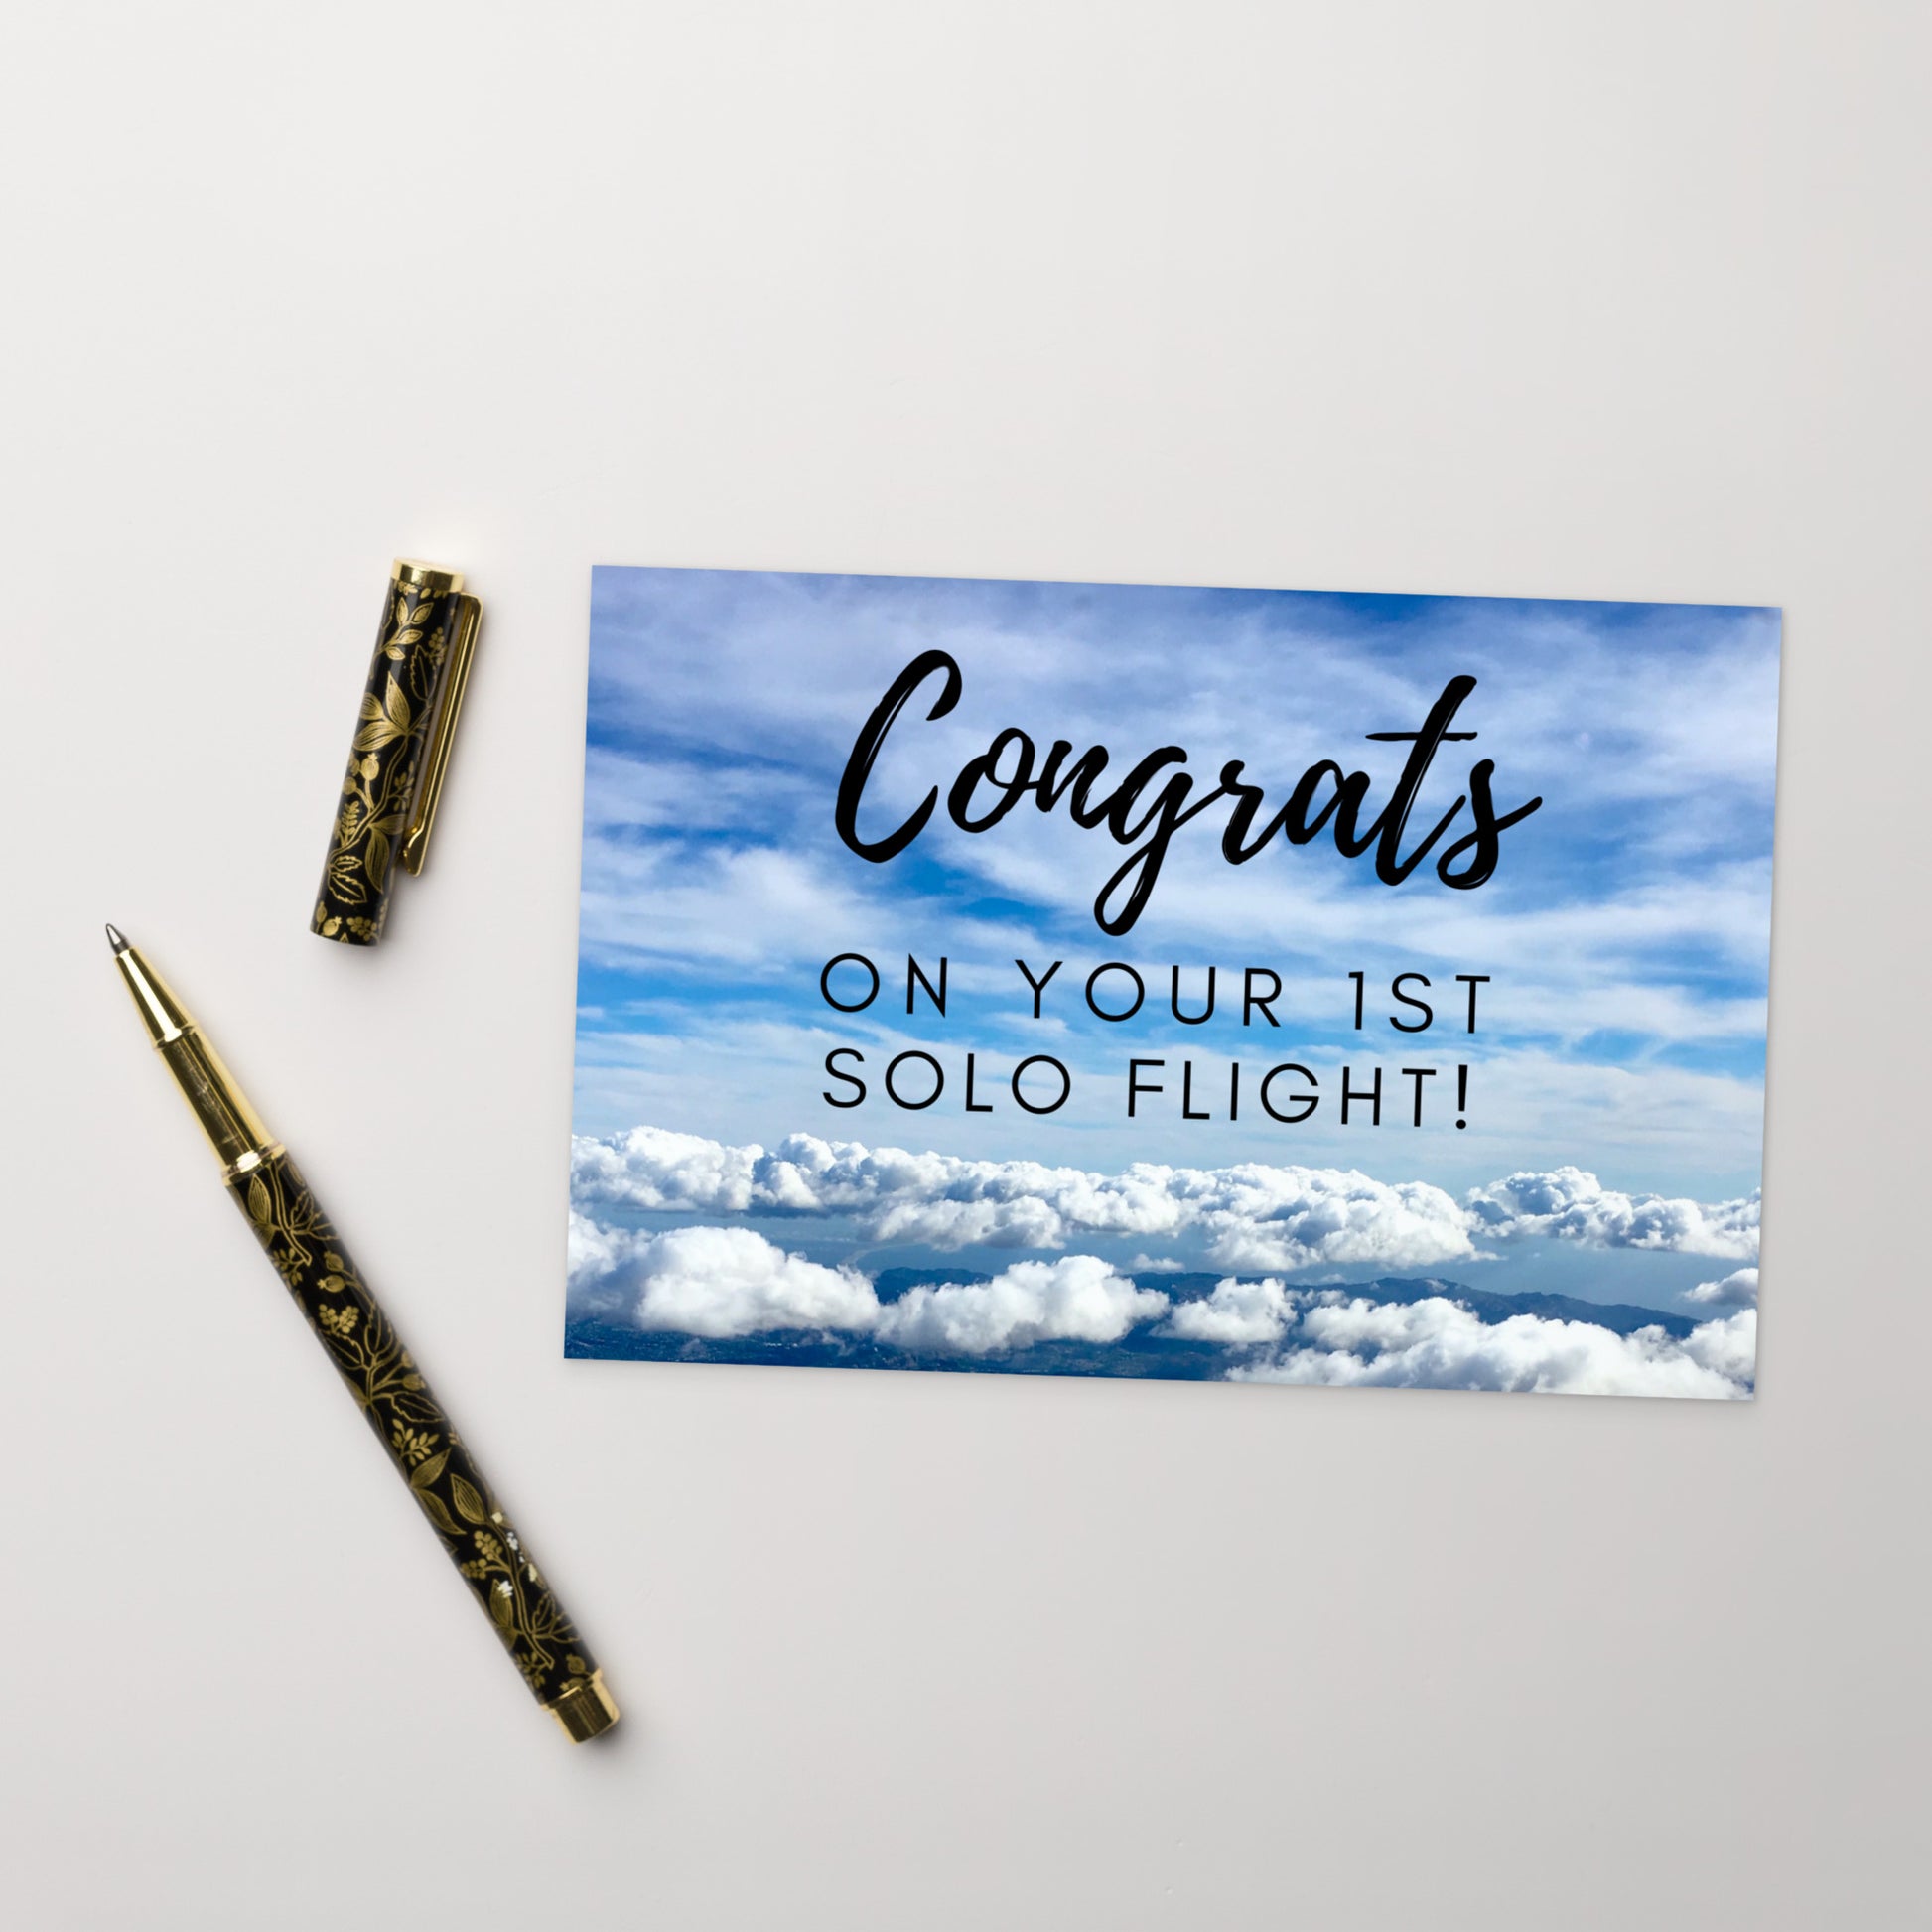 Congrats on your 1st Solo Flight! - postcard (sky)